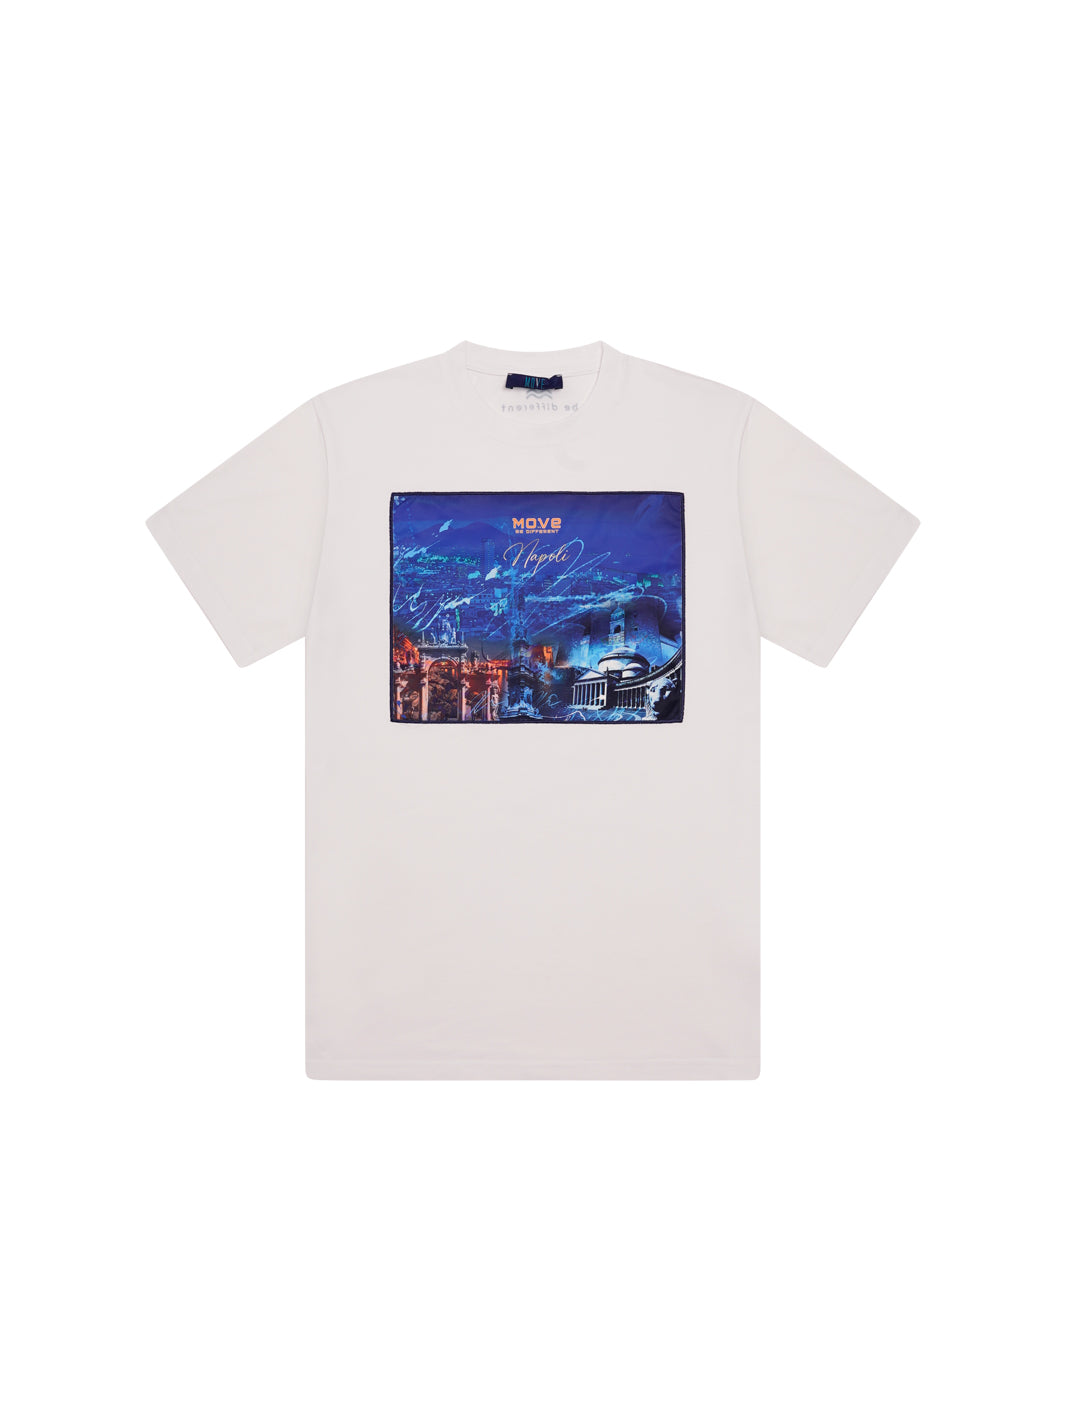 TS Print Boy Plebiscito - T-Shirt - Move Beachwear